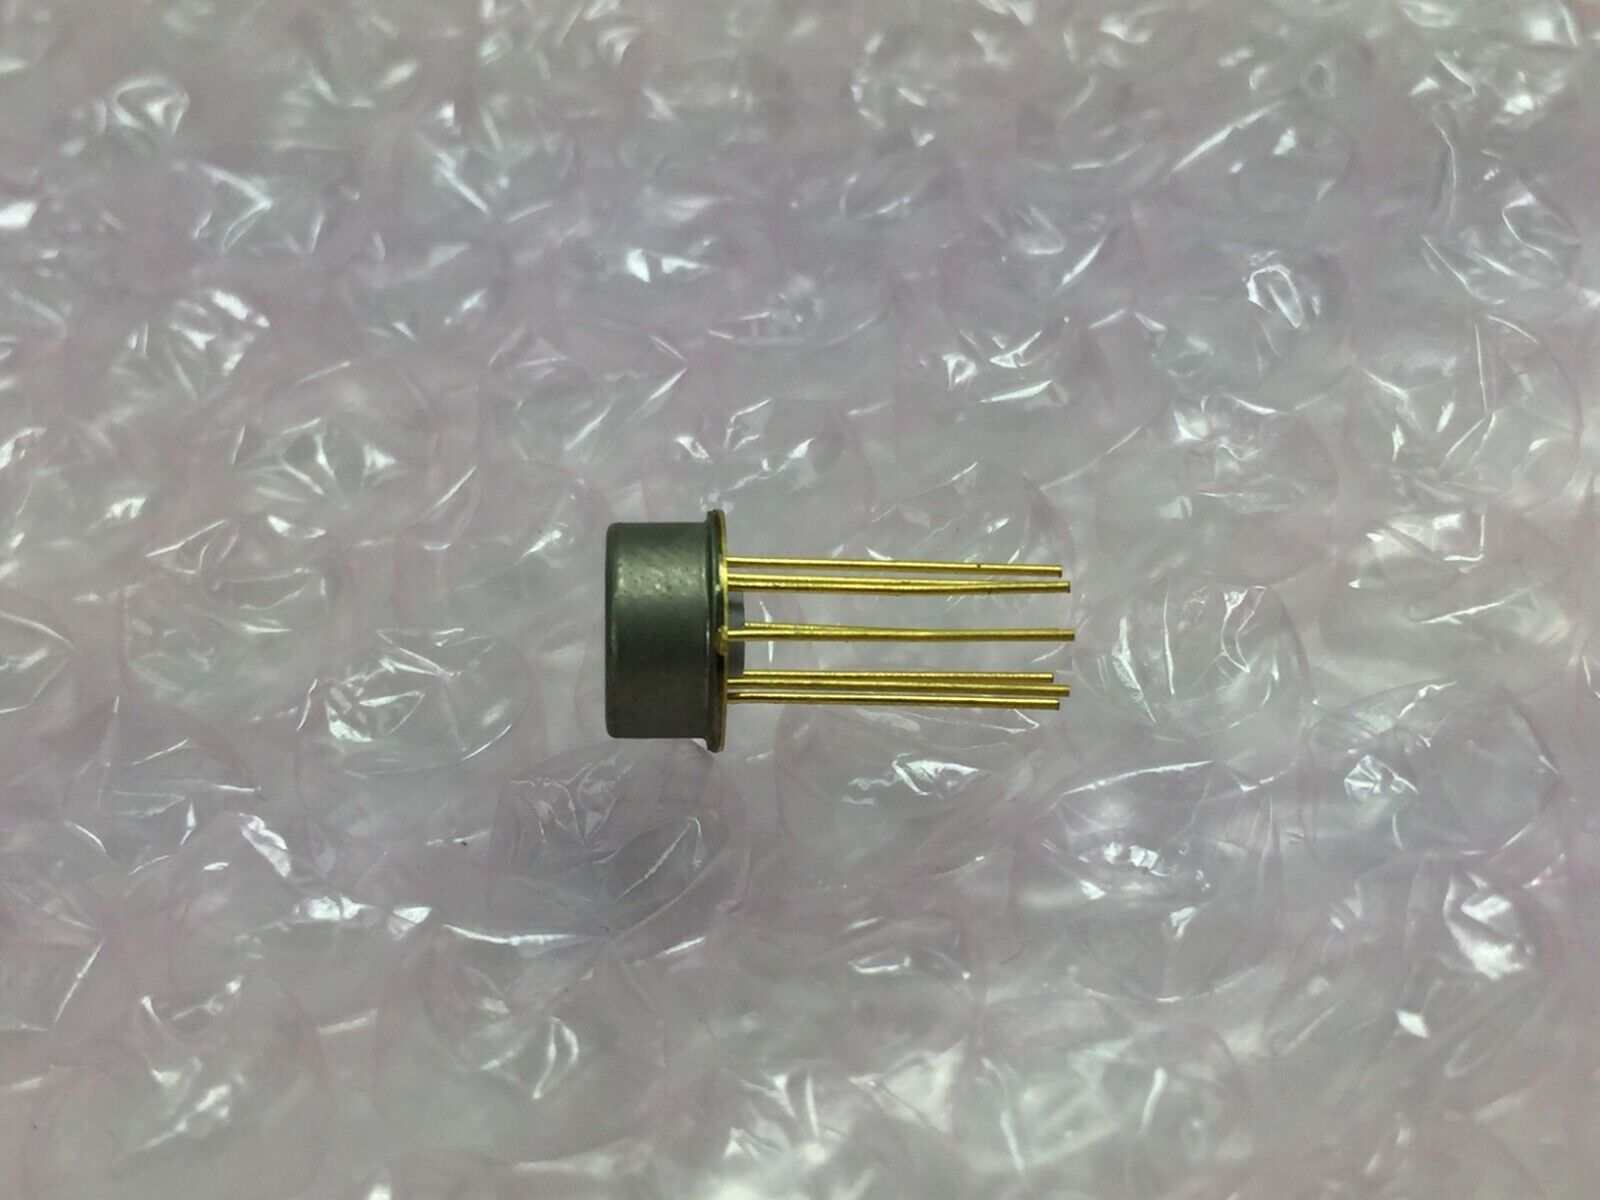 710CE Integrated Circuit Gold Pin  NOS